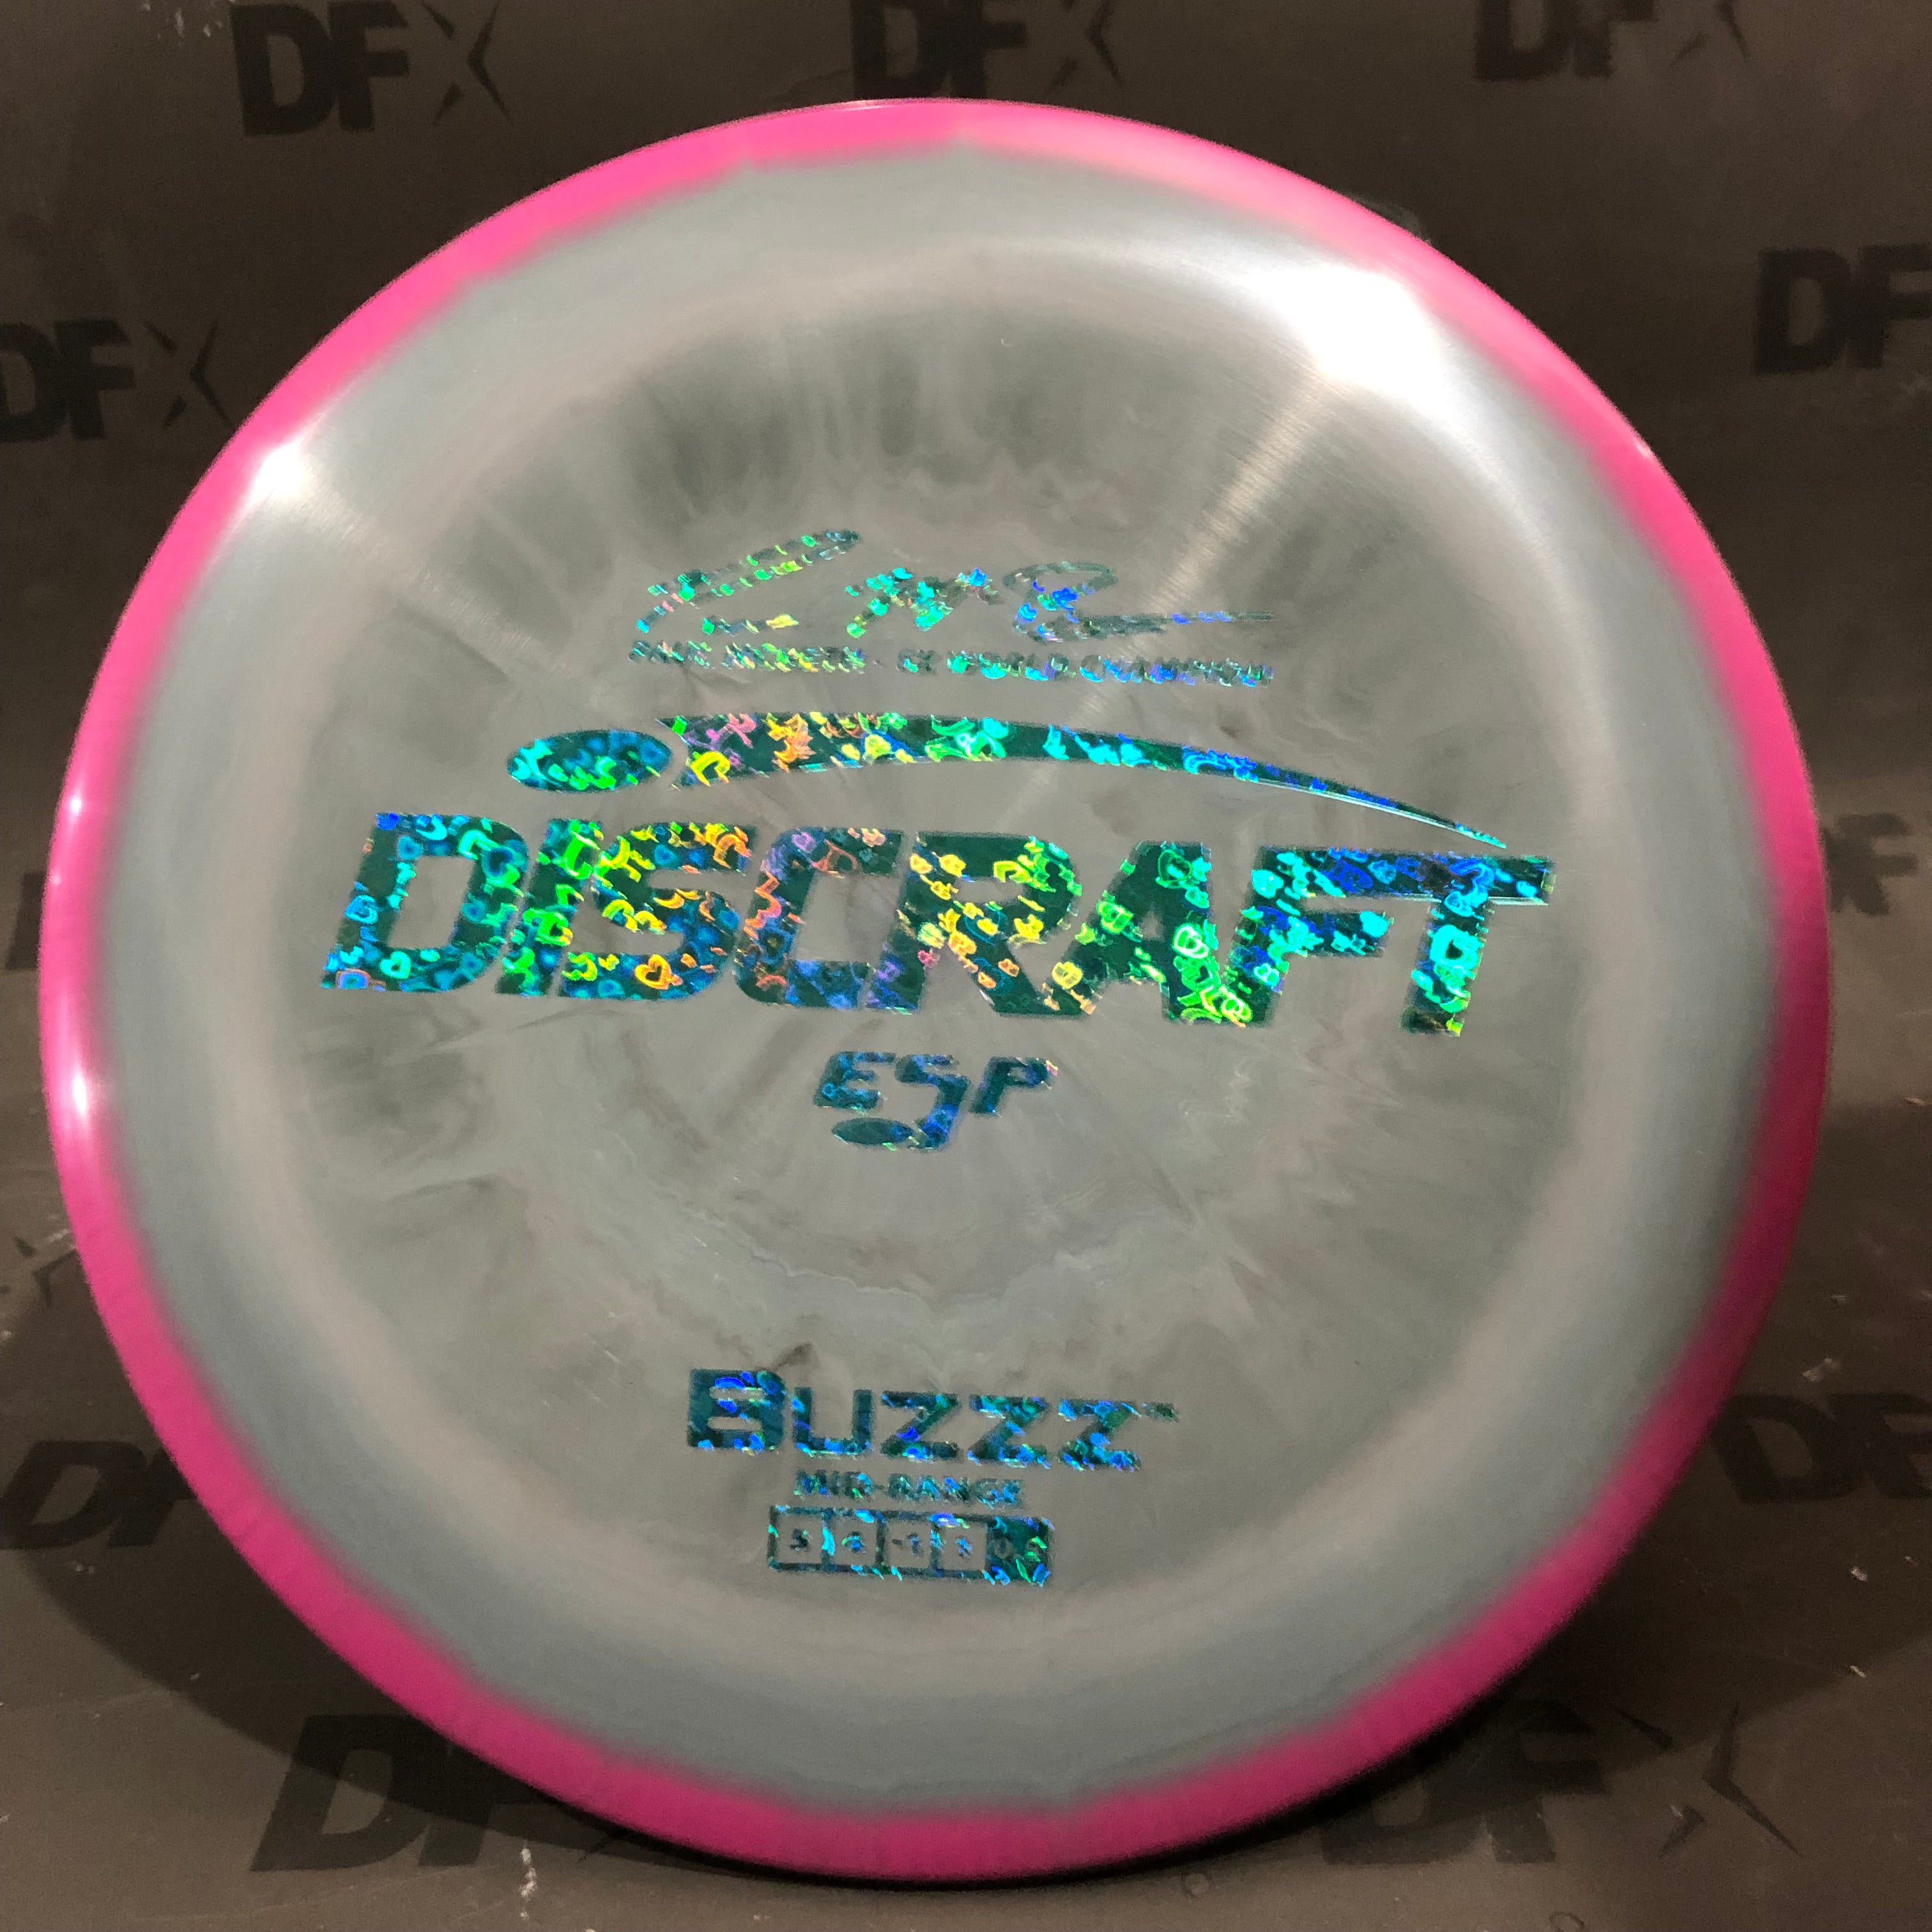 Discraft ESP Buzzz (Paul McBeth 5x)